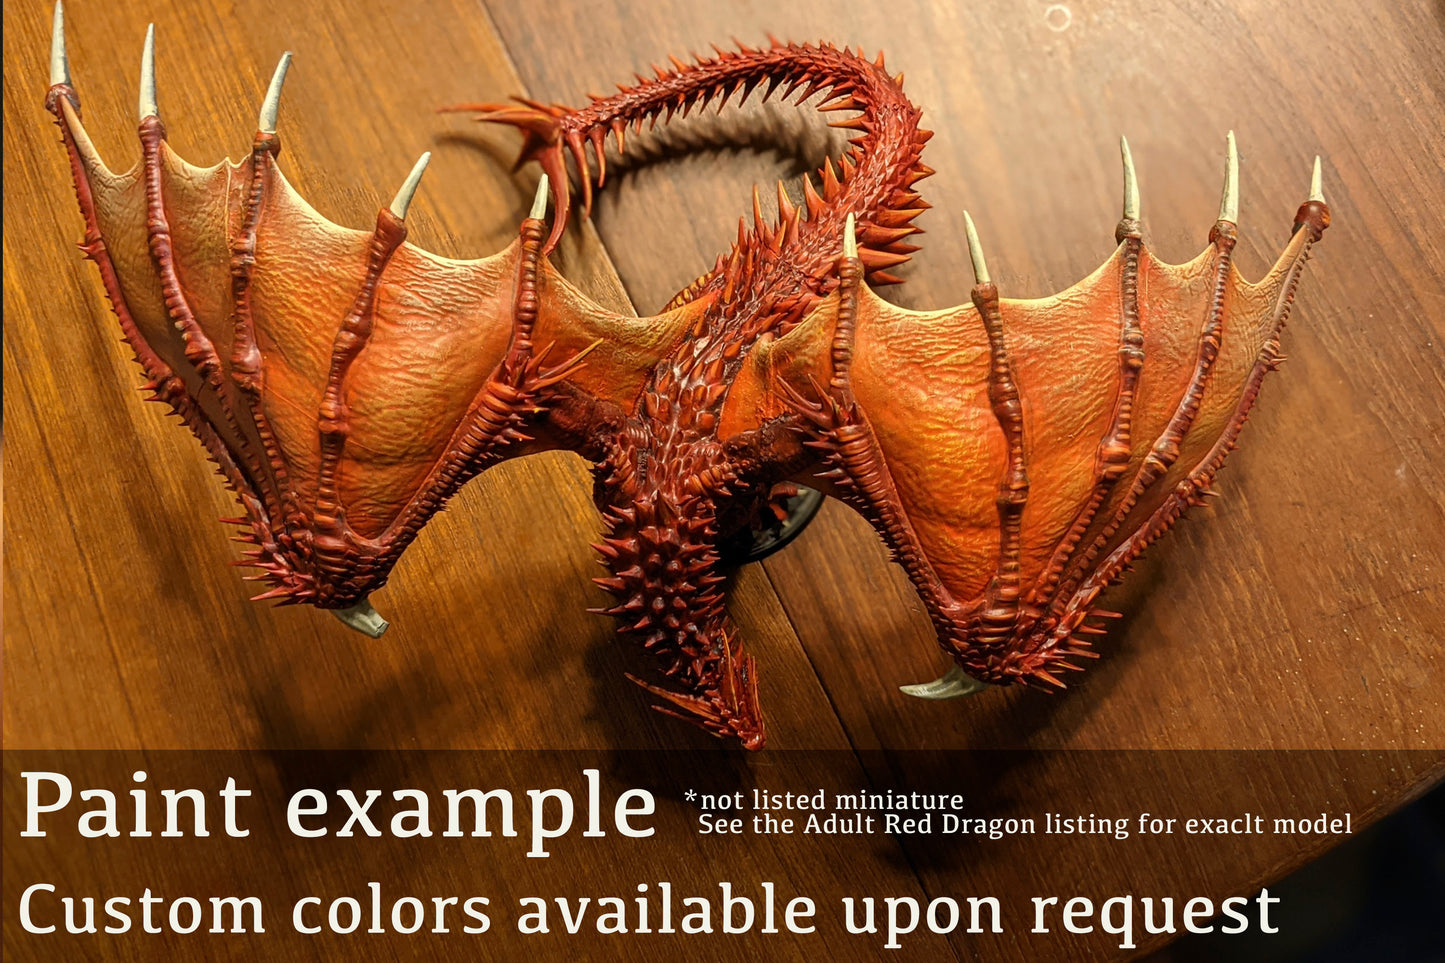 Valarauka, Fire Demon - Mini Monster Mayhem Printed Miniature | Dungeons & Dragons | Pathfinder | Tabletop